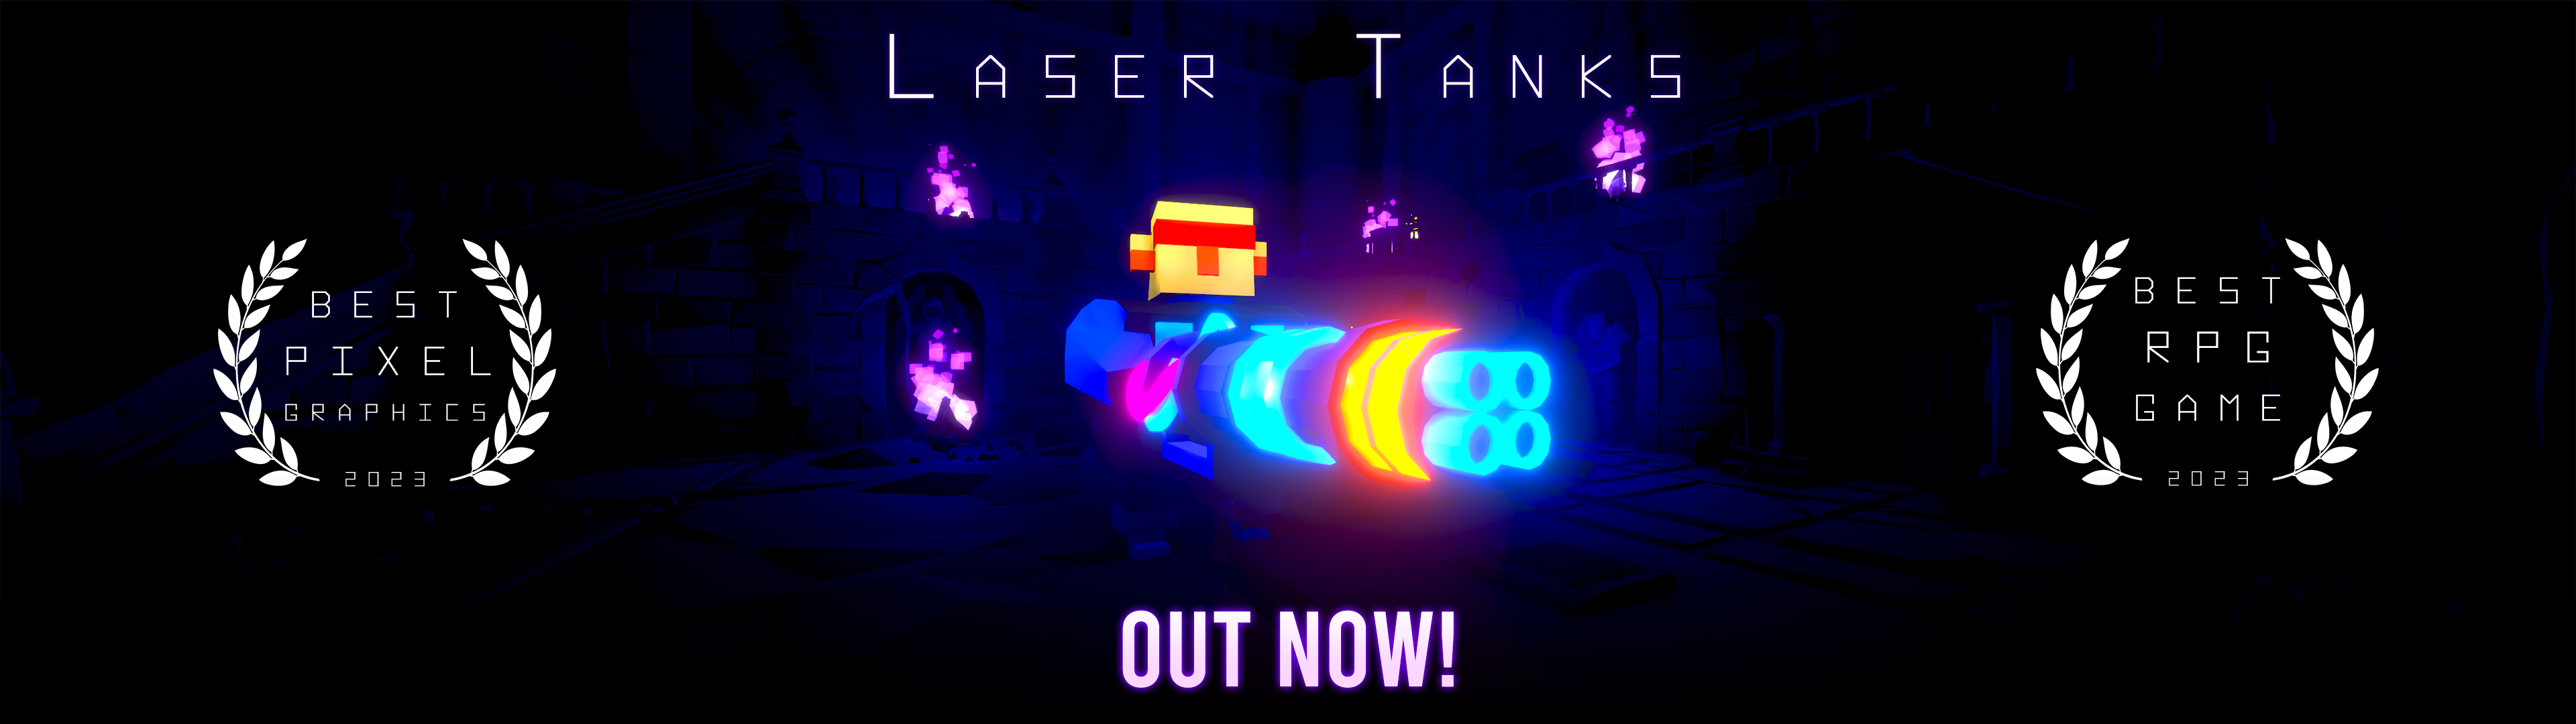 Laser Tanks - Press Kit